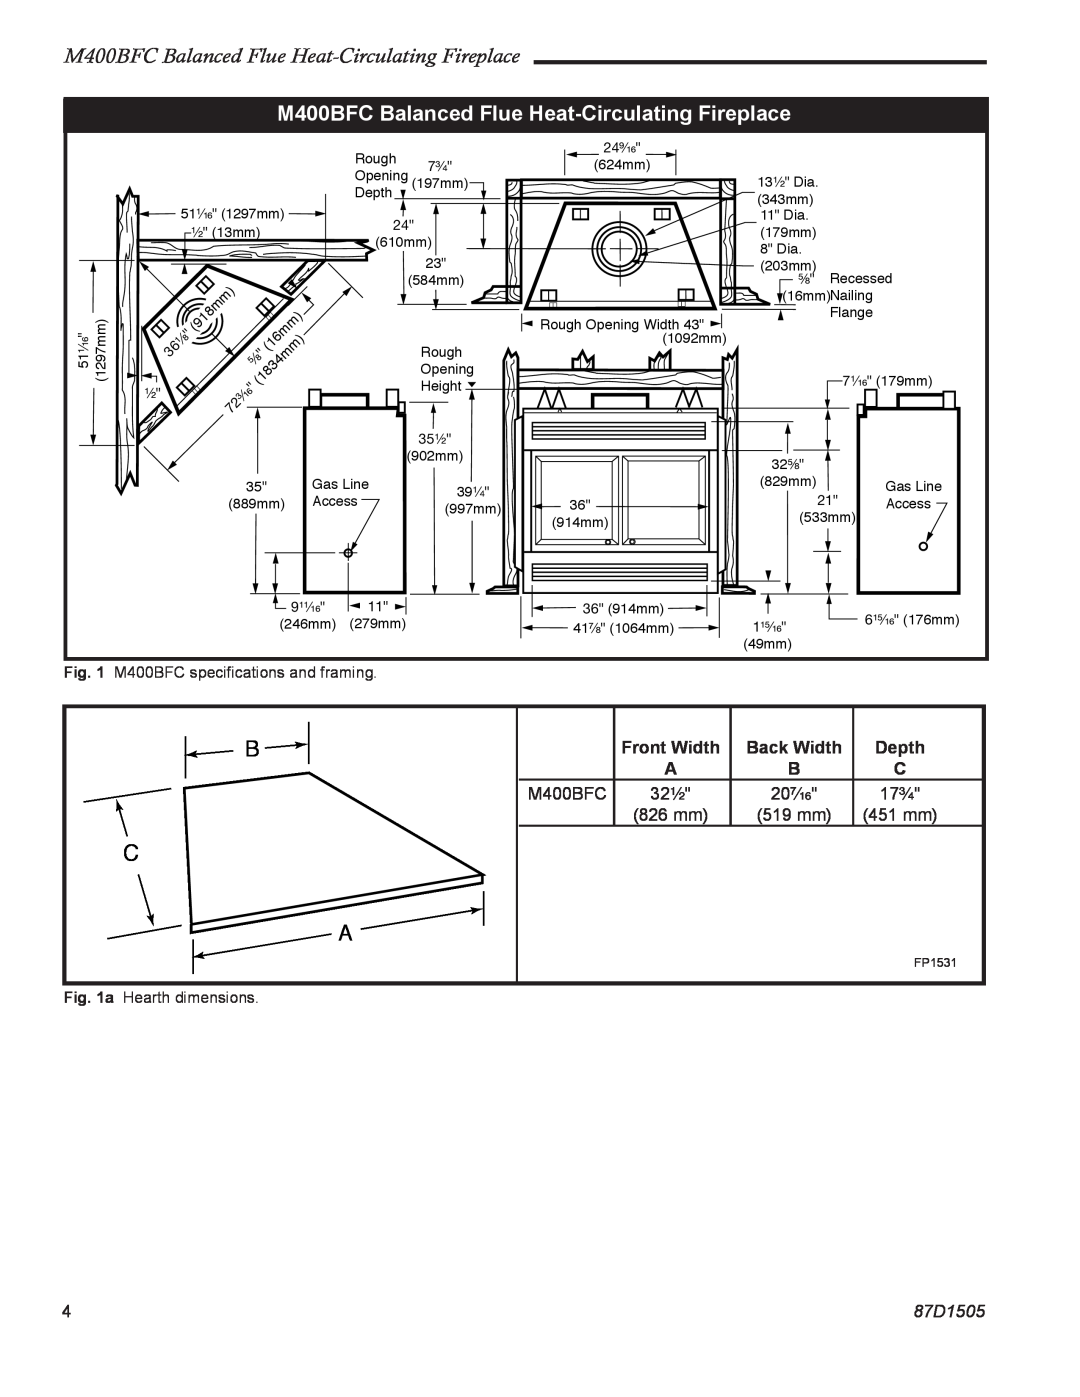 Monessen Hearth manual M400BFC Balanced Flue Heat-Circulating Fireplace, 87D1505 